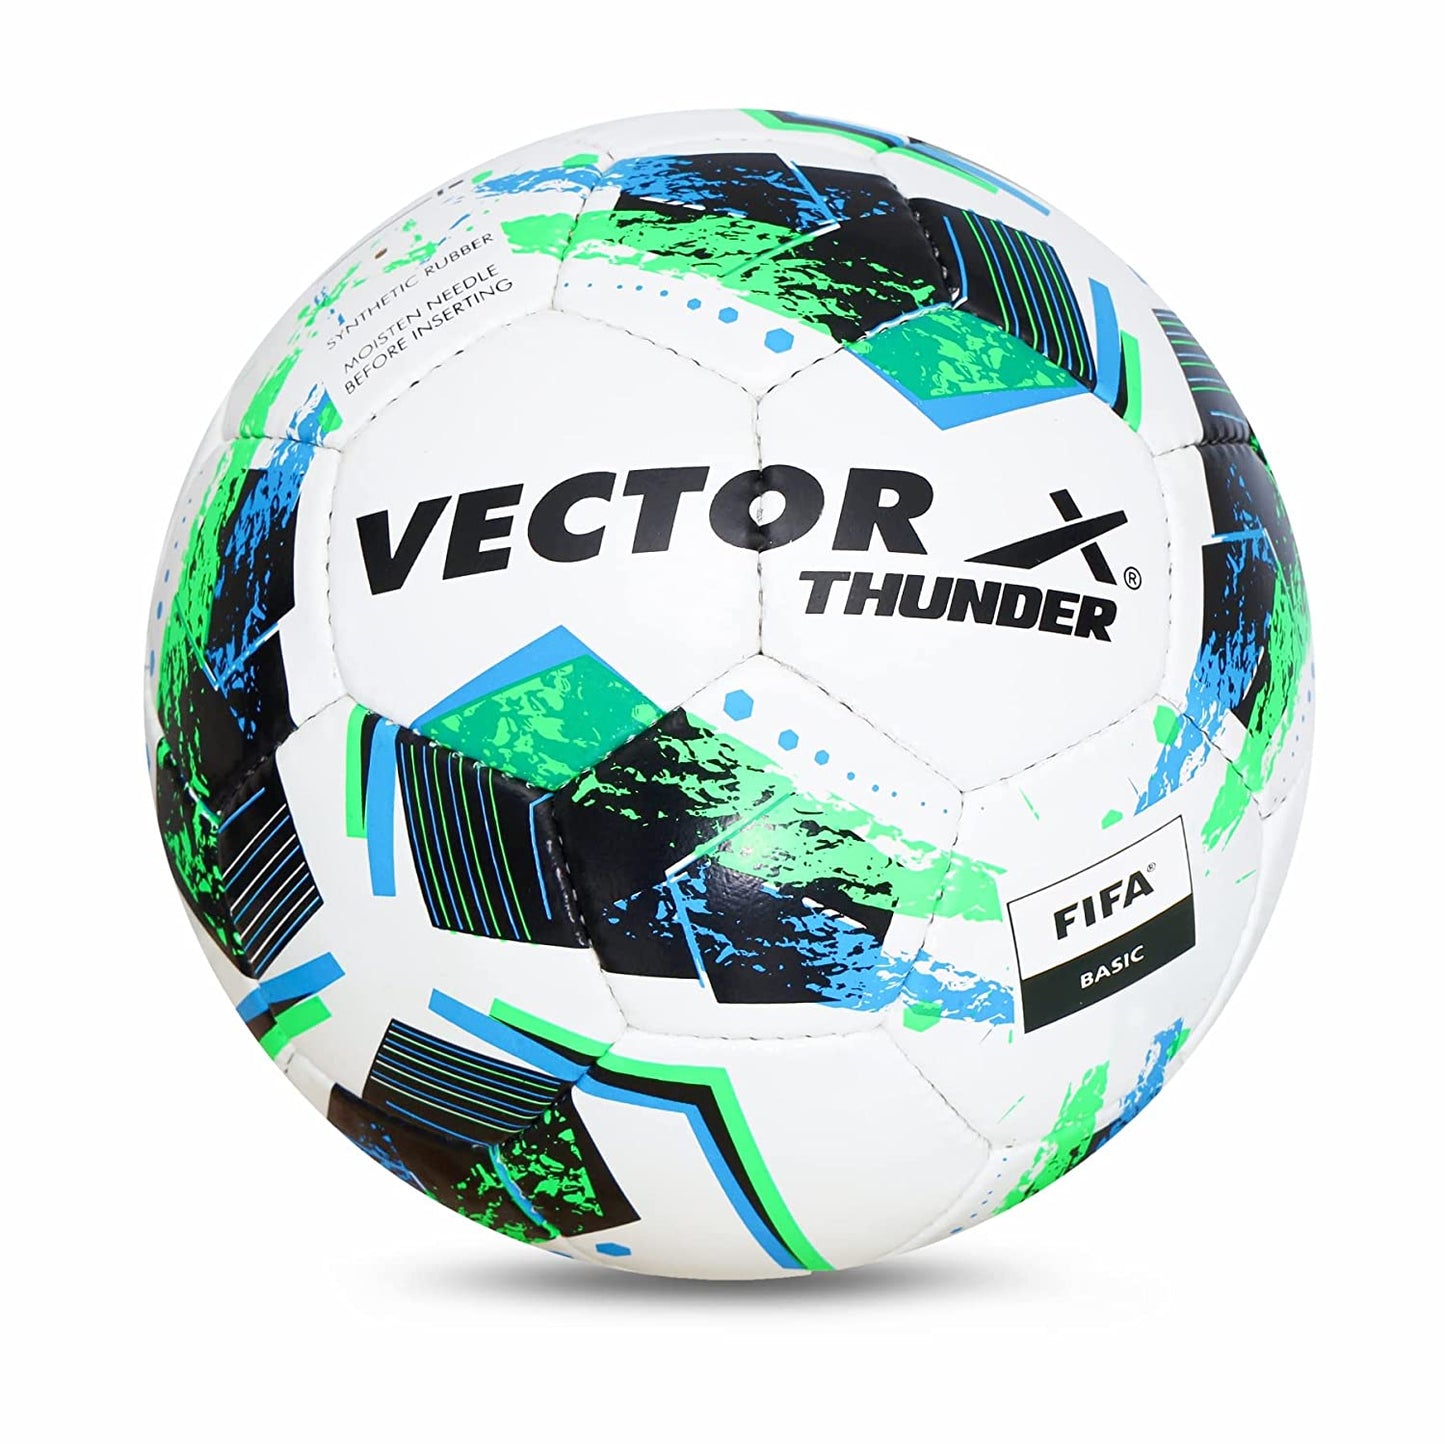 Vector X Thunder Football, Size 5 - Best Price online Prokicksports.com